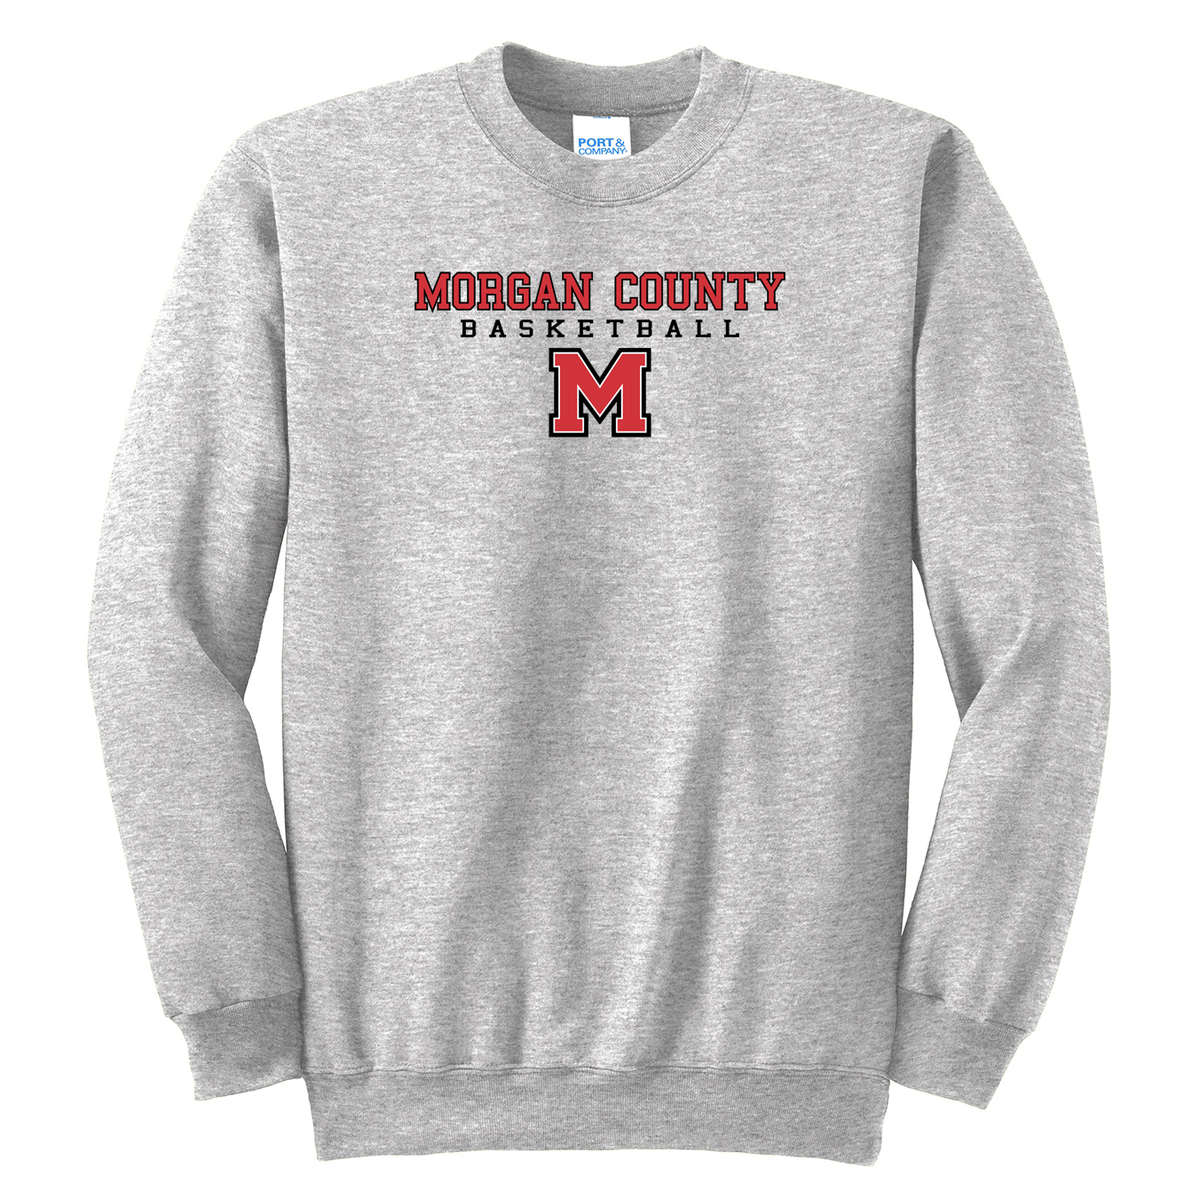 Morgan County Basketball Crew Neck Sweater